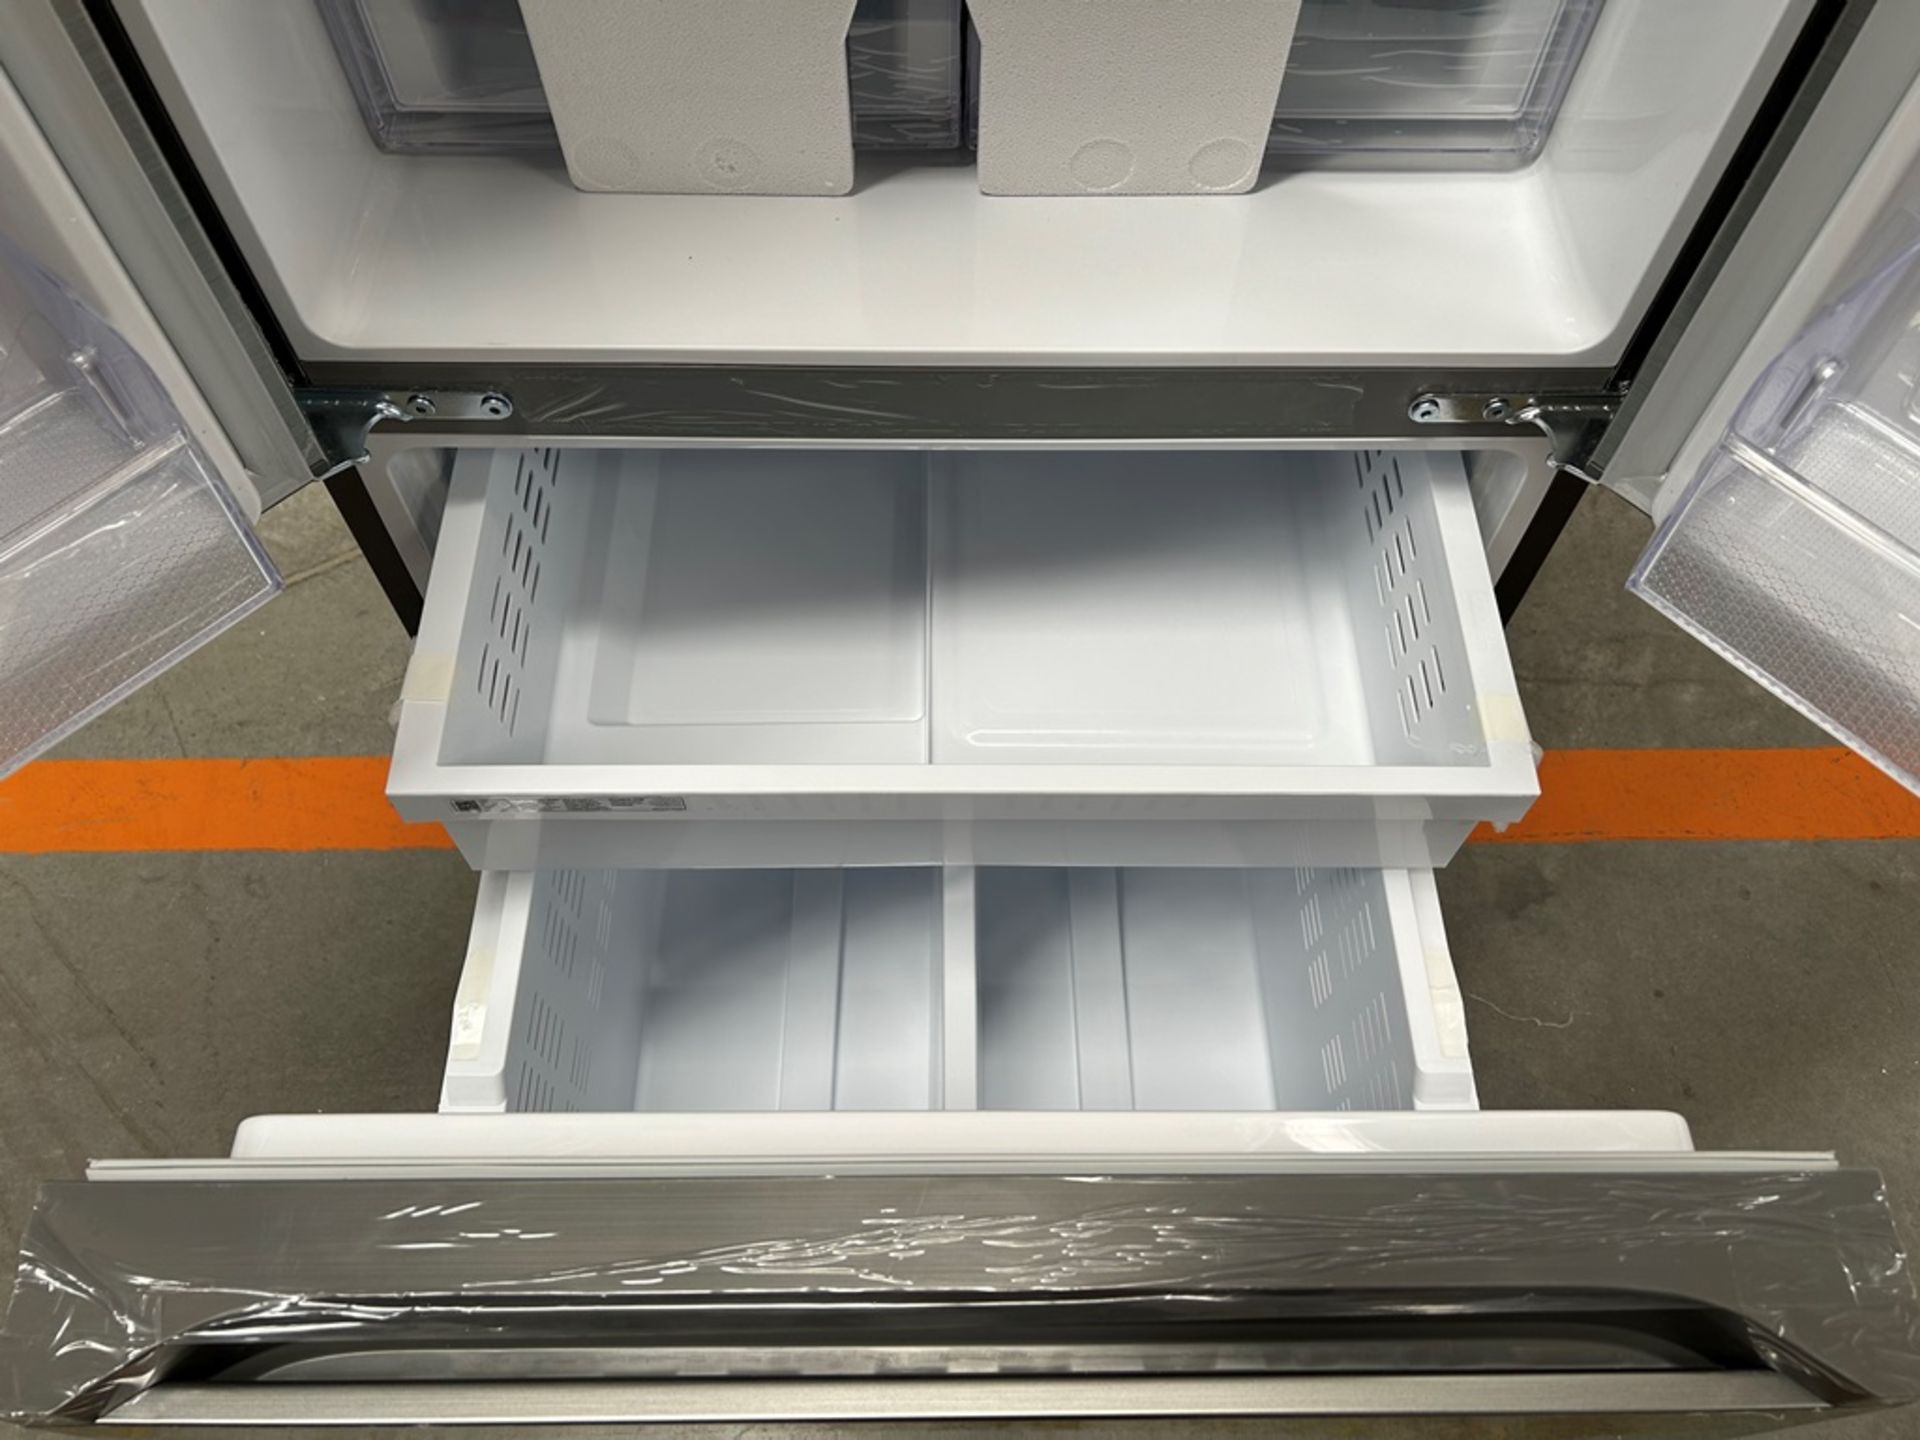 (NUEVO) Refrigerador Marca SAMSUNG, Modelo RF22A4010S9, Serie 01874K, Color GRIS - Image 6 of 11